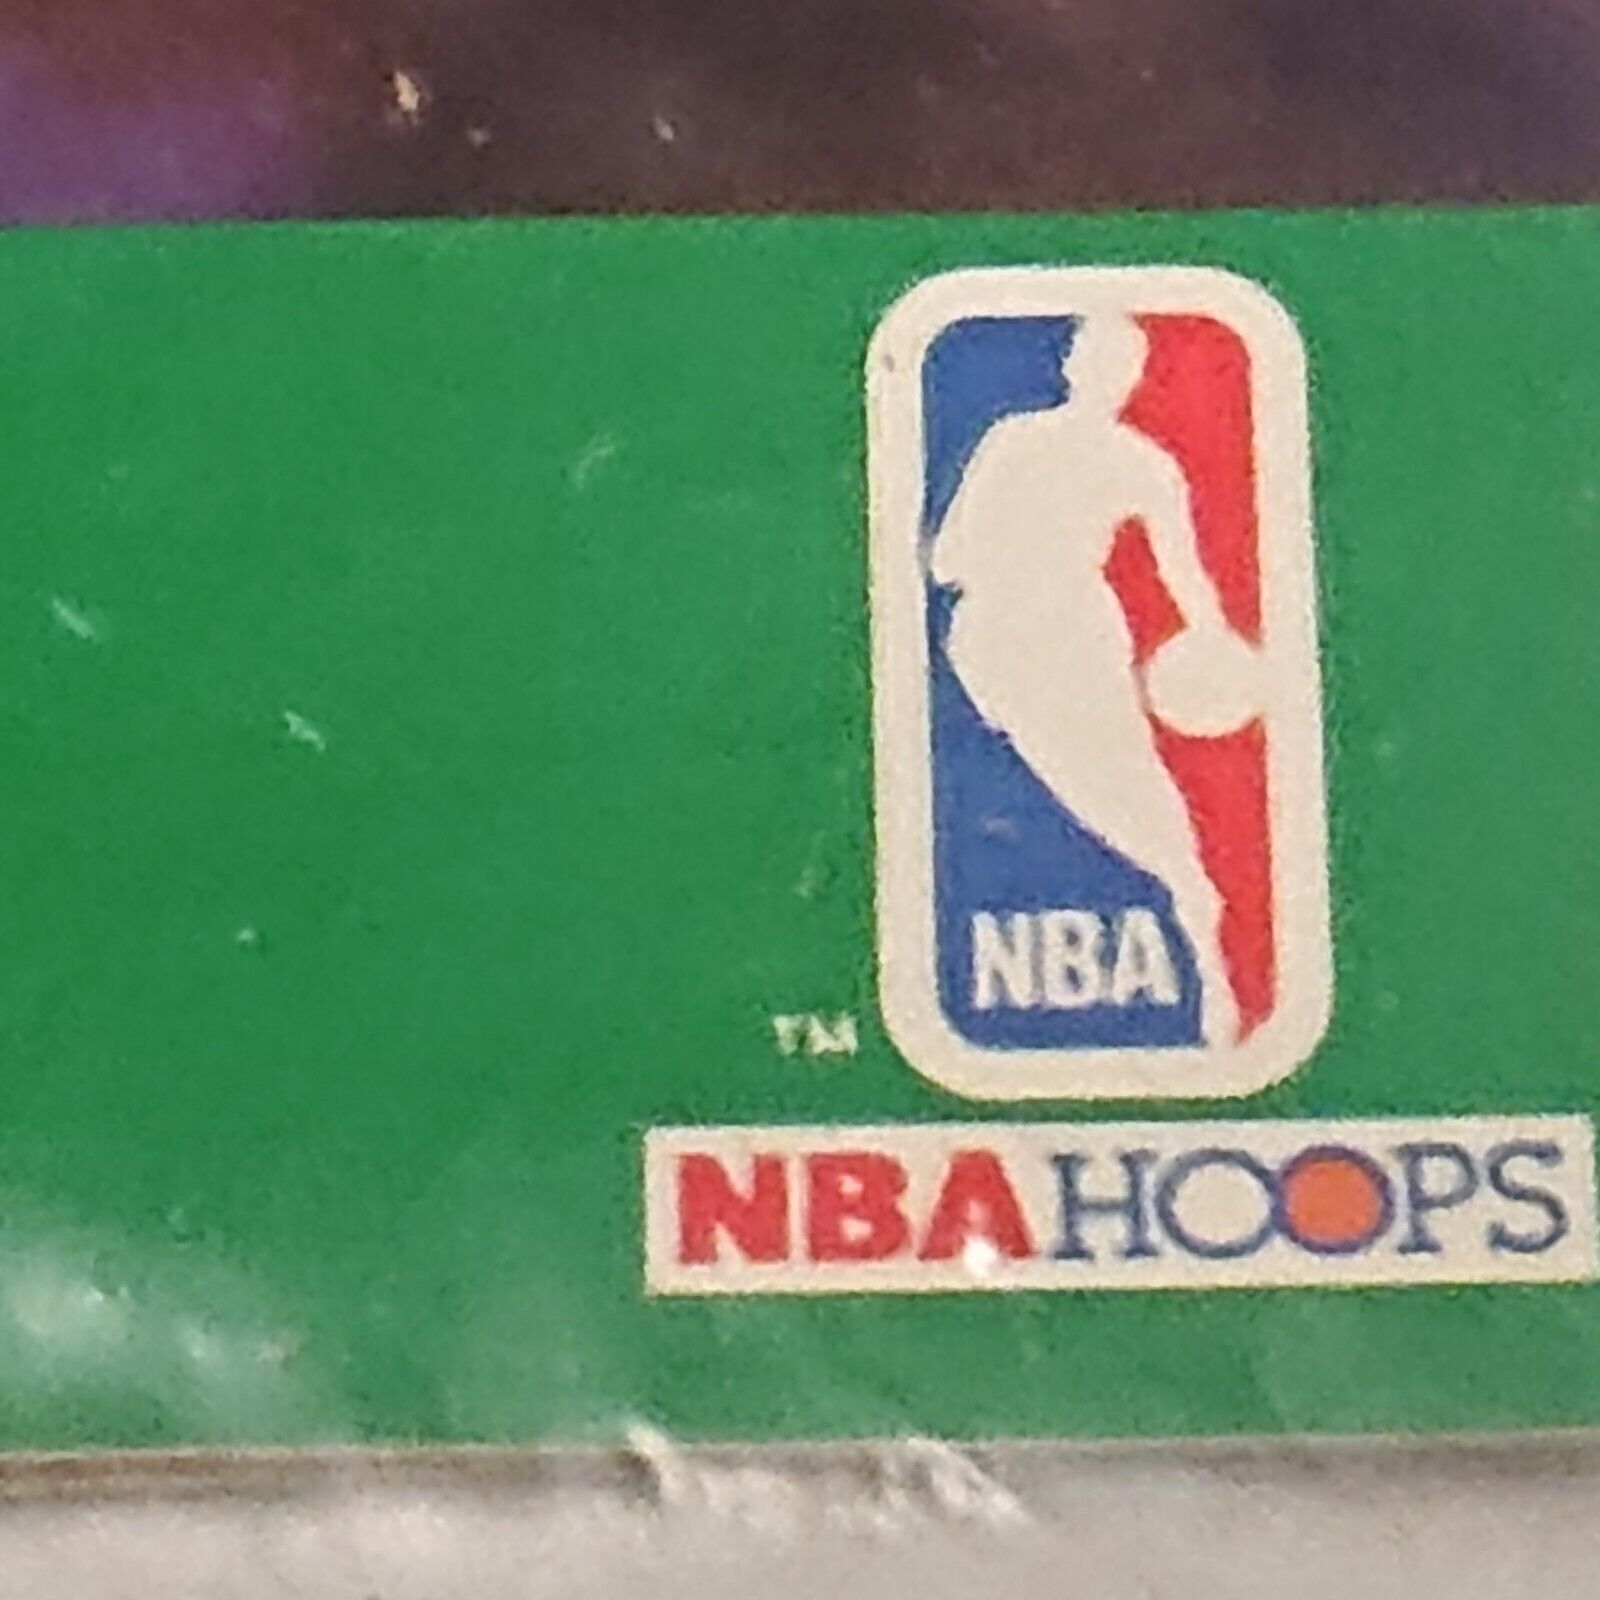 1990 Larry Bird Sealed NBA Hoops 8 x 10 Glossy Action Photos  Boston Celtics